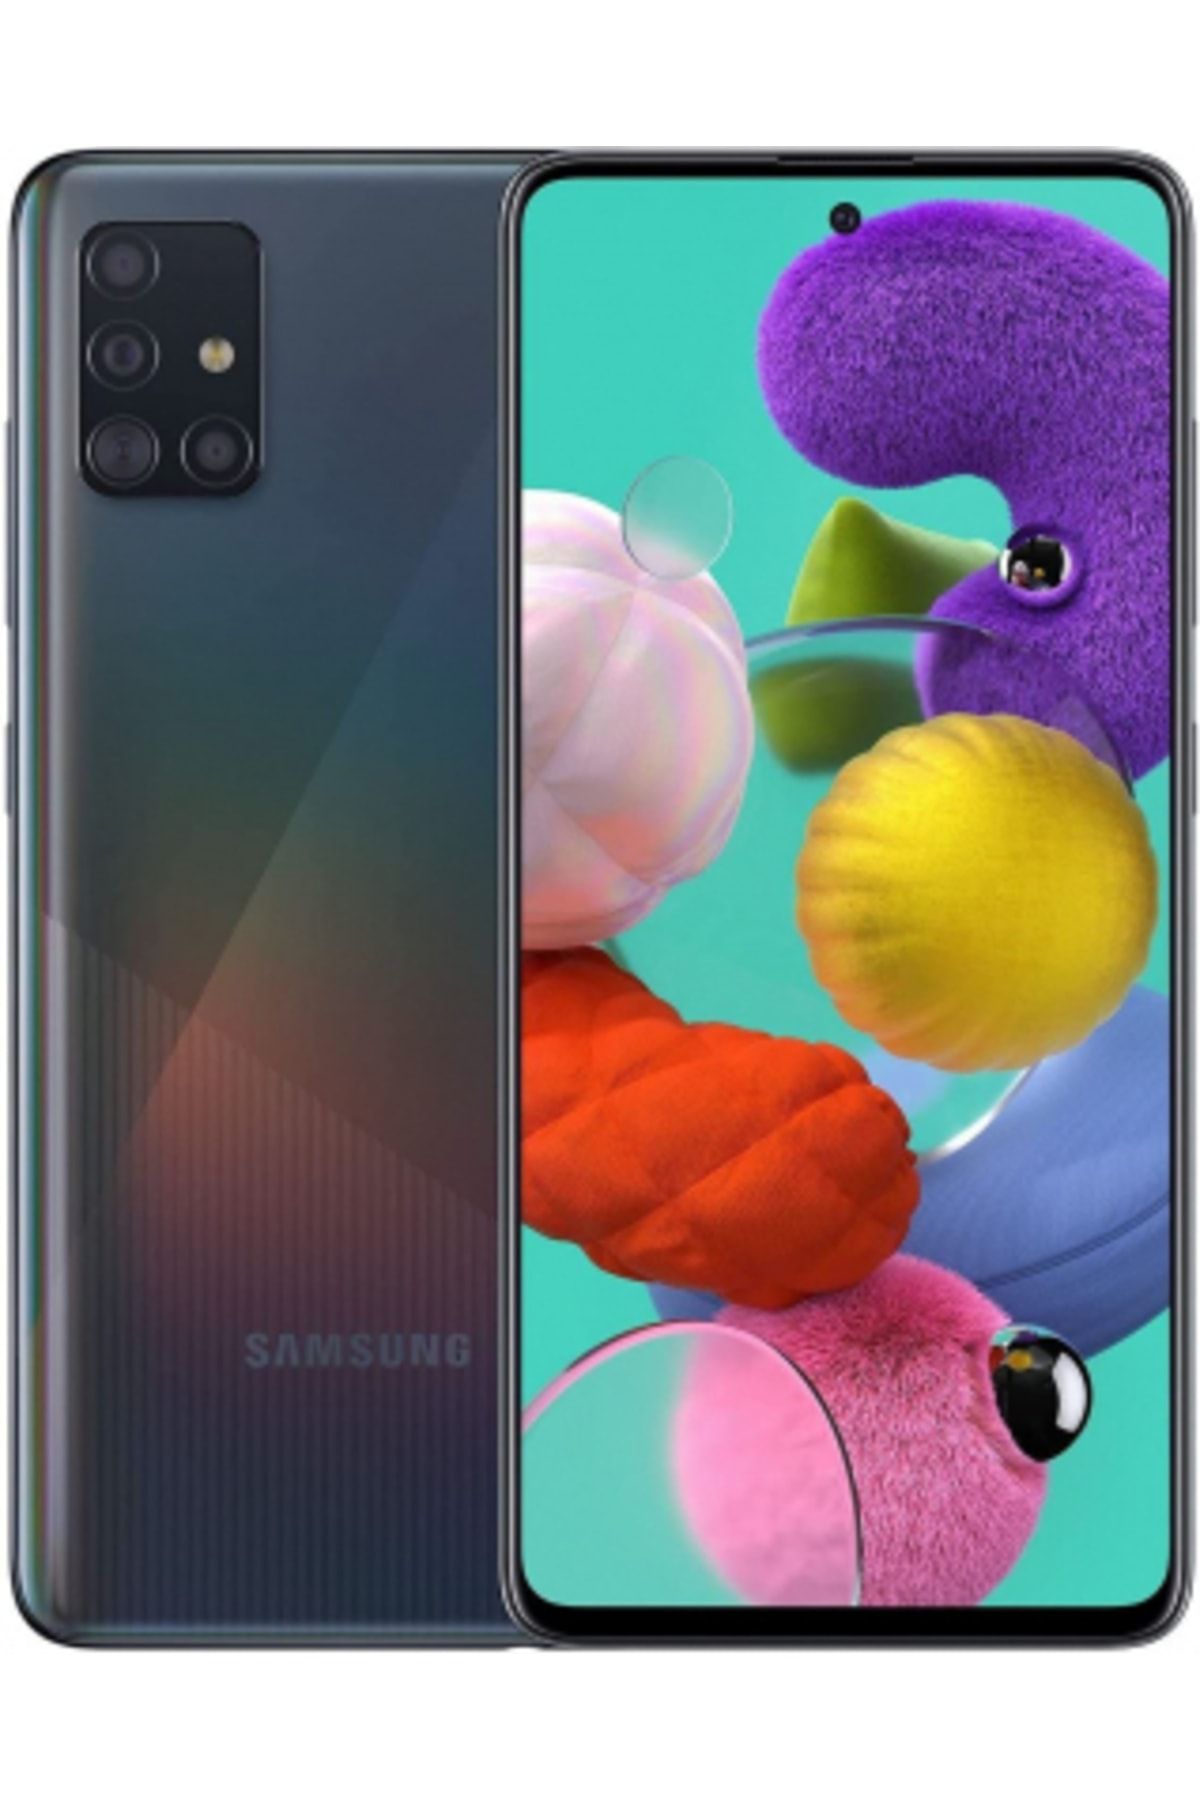 Samsung Yenilenmiş Galaxy A51 128 GB Black Cep Telefonu (12 Ay Garantili)